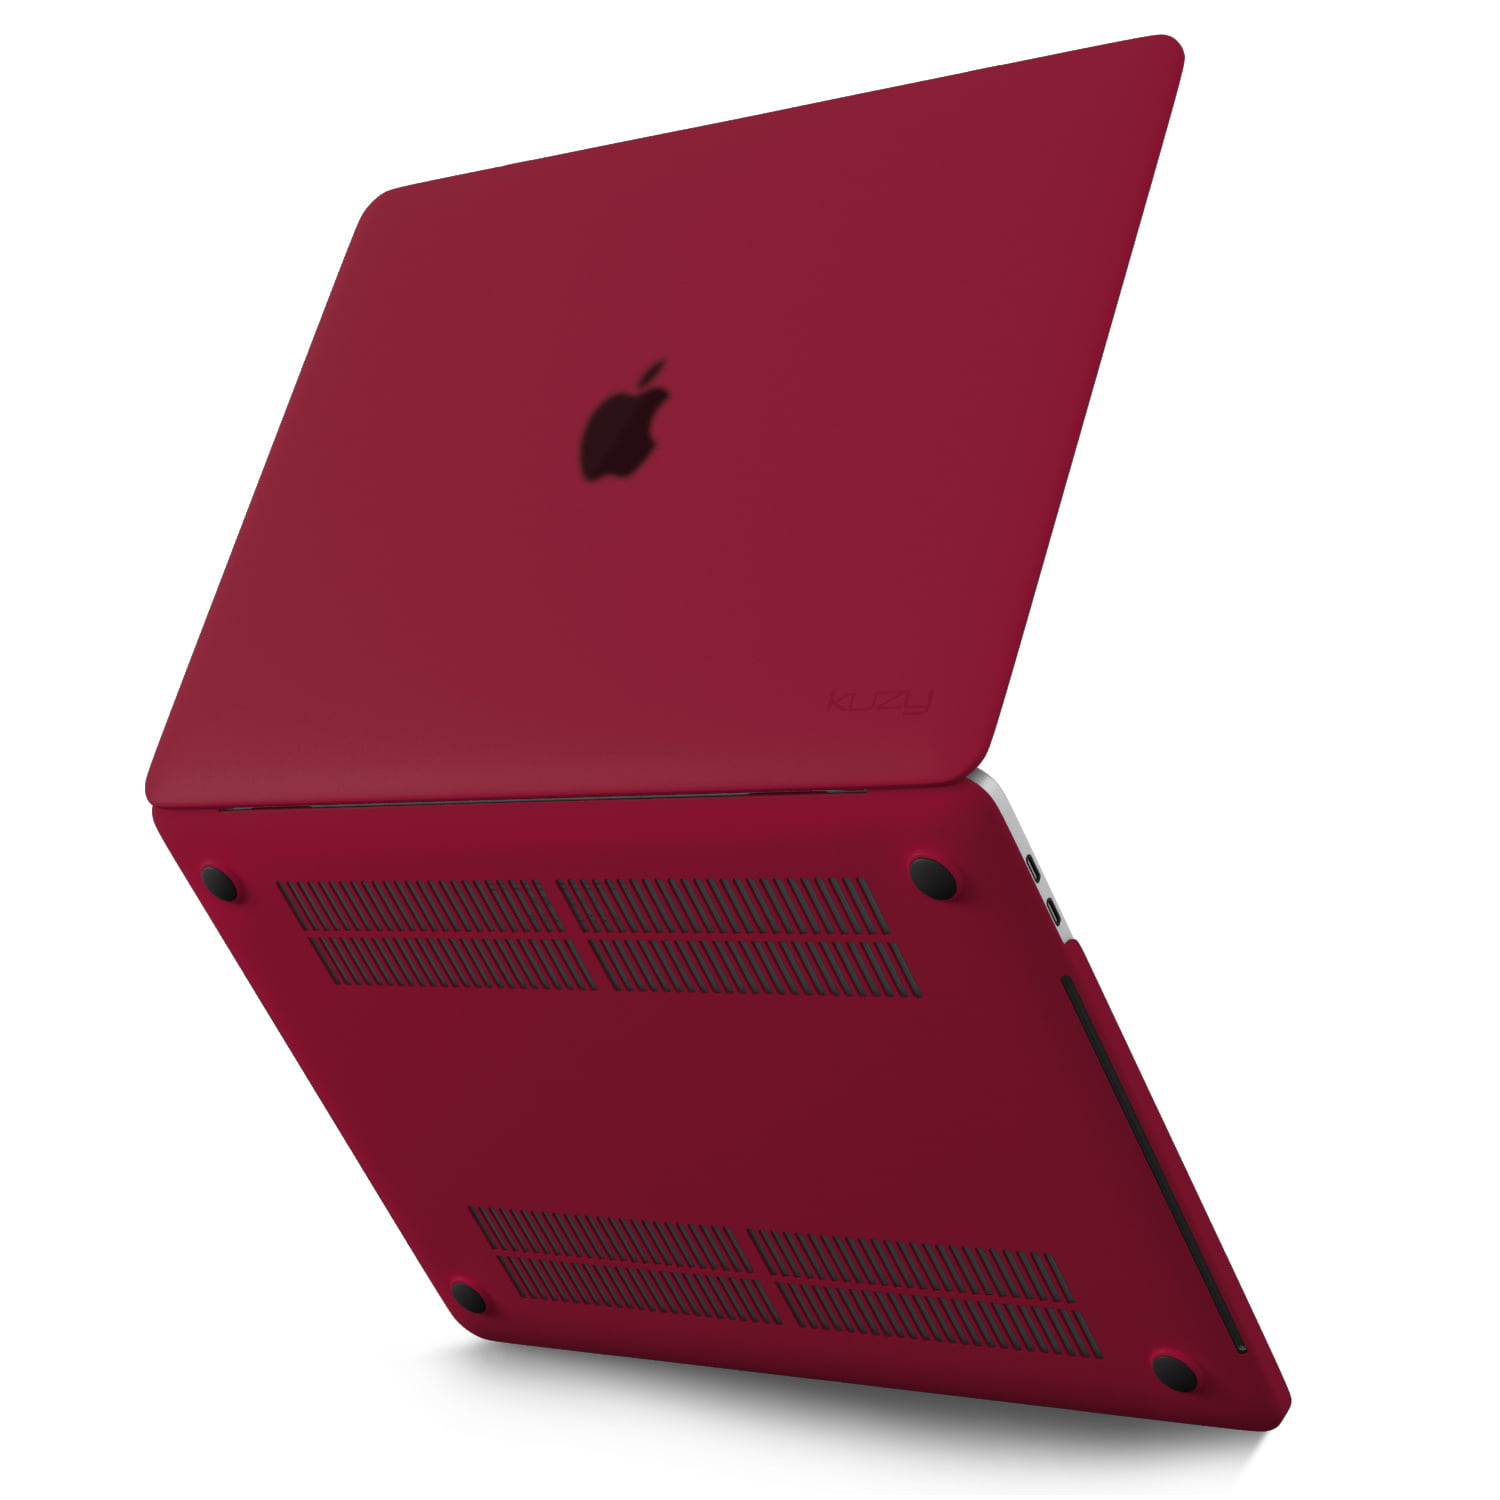 Kuzy MacBook Pro 13 Case 2017 & 2016, A1706 & A1708 Rubberized Hard Case (NEWEST Release